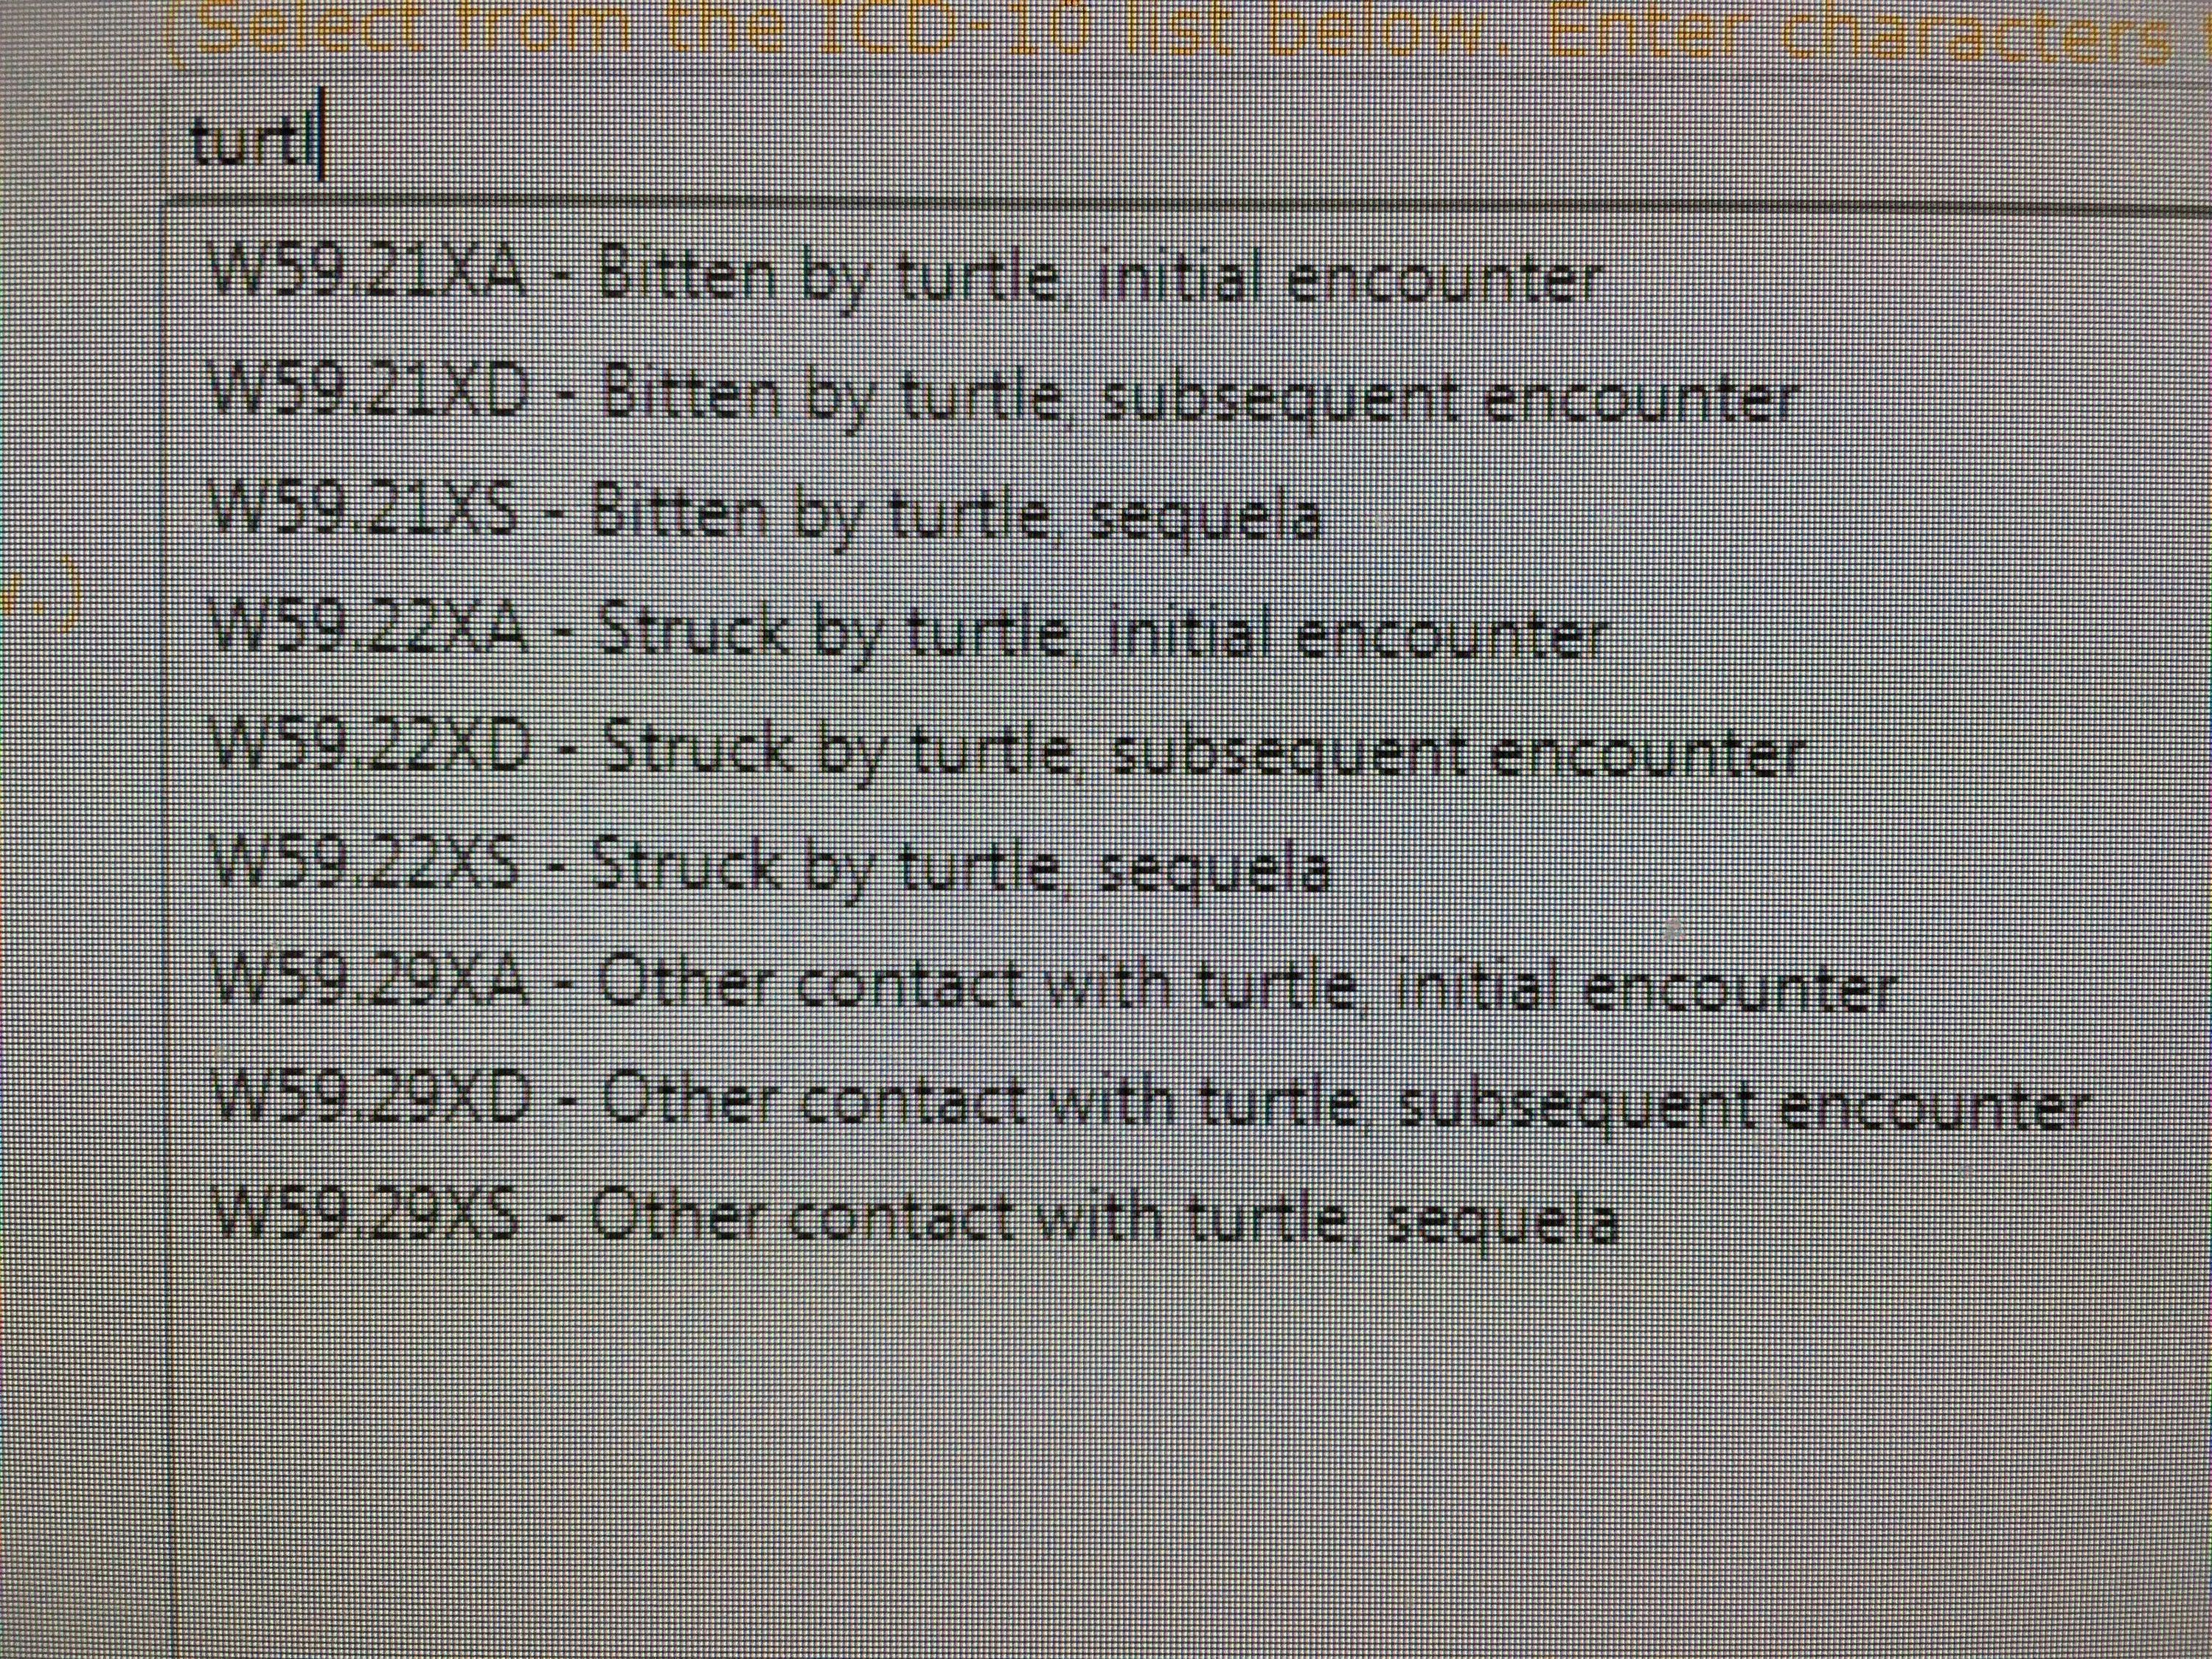 ICD10 Turtle